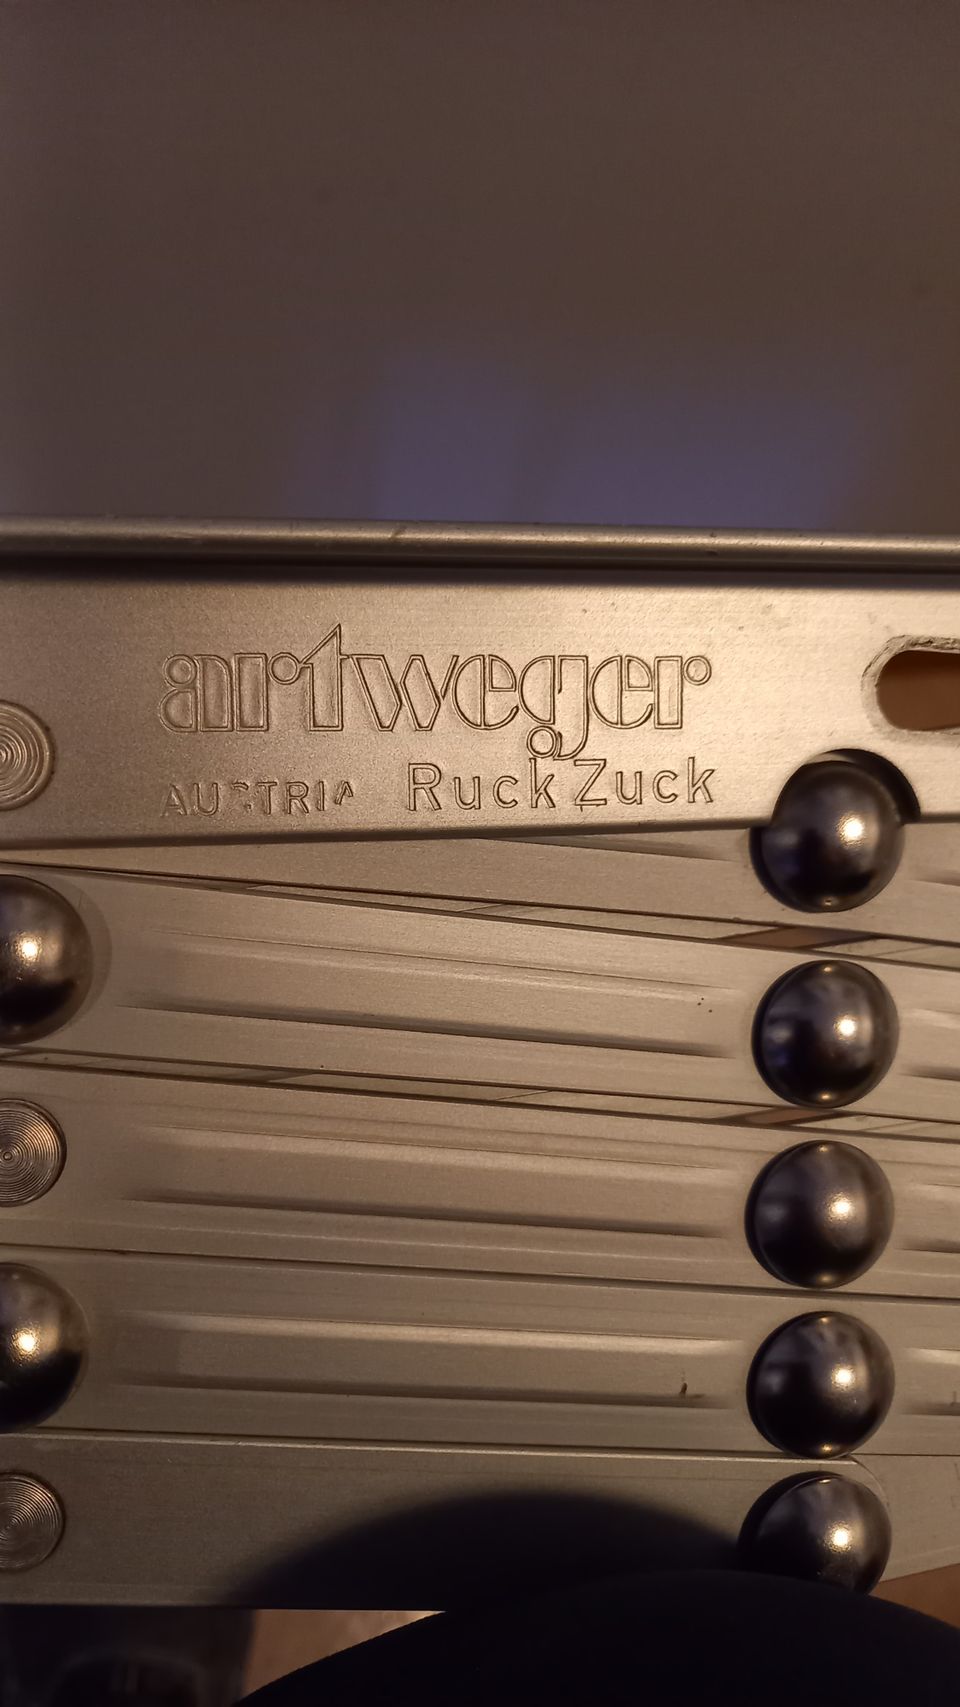 Kuivausteline Artweger Ruck-Zuck